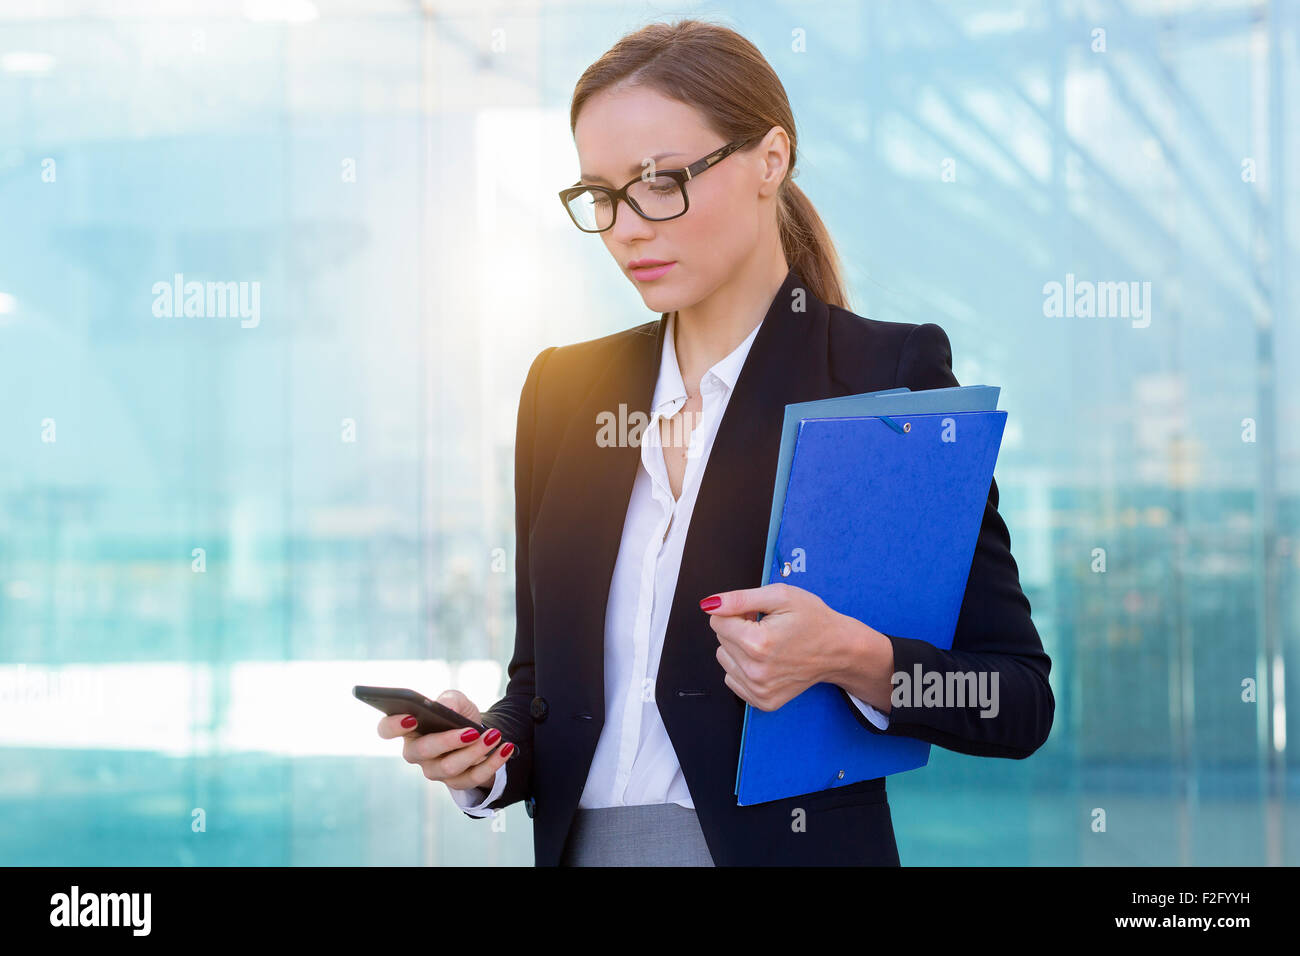 Businesswoman using a smart phone Banque D'Images